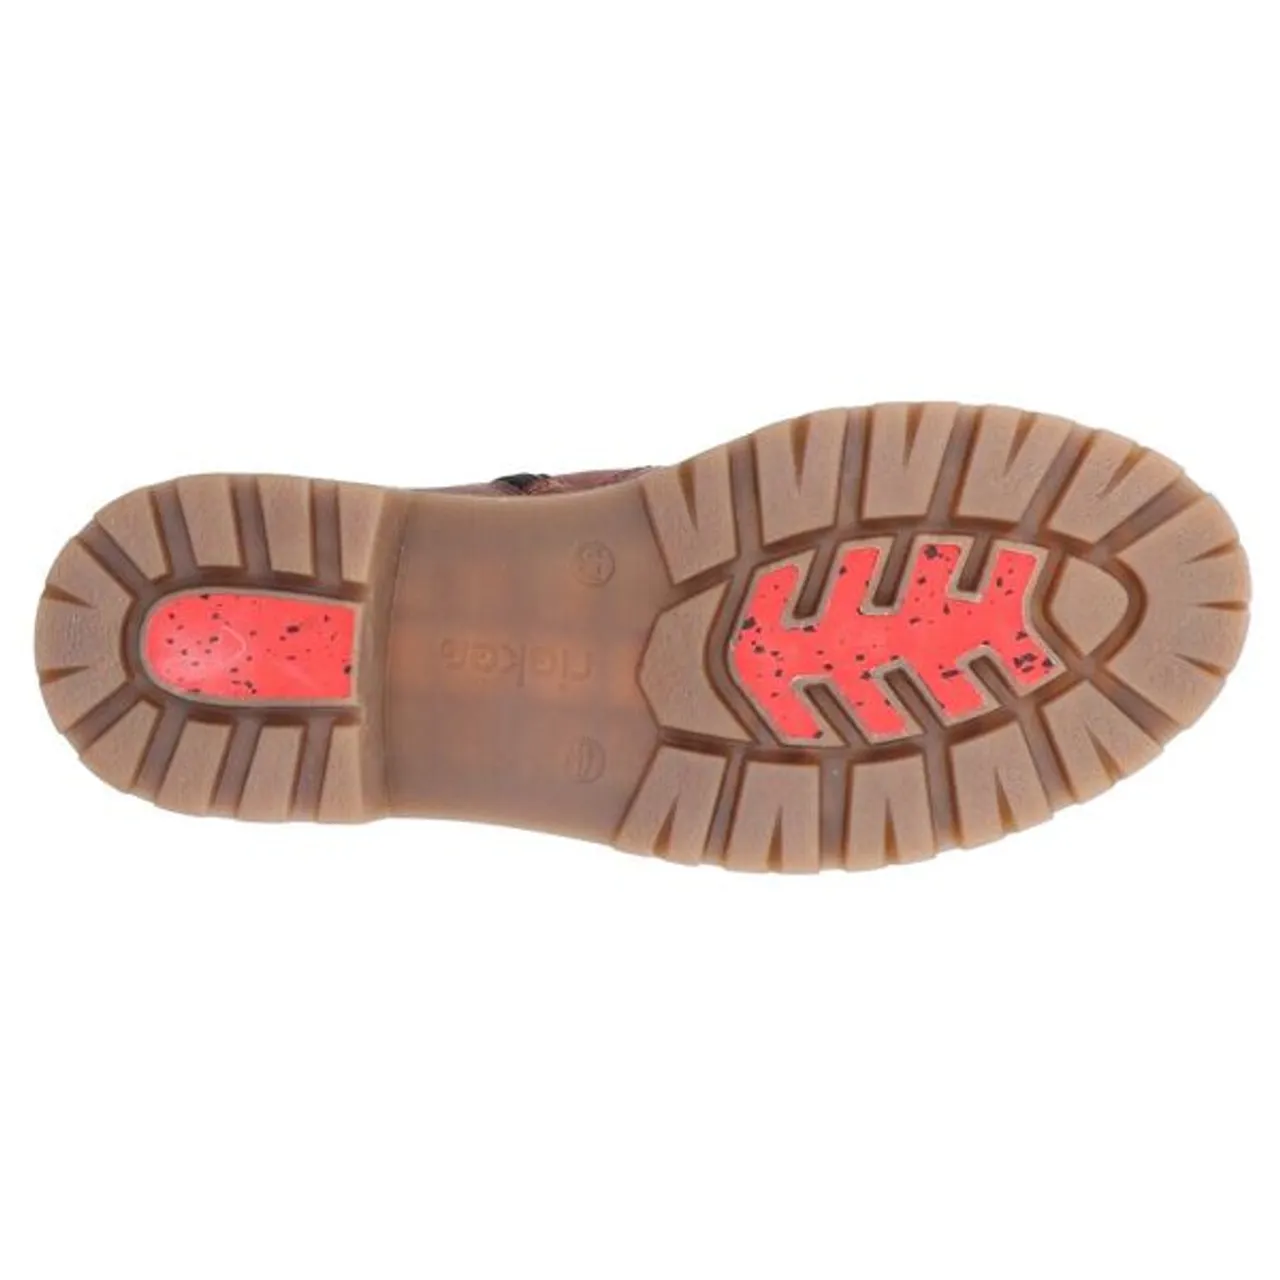 Winterstiefelette RIEKER Gr. 37, rot (rotbraun) Damen Schuhe Reißverschlussstiefeletten